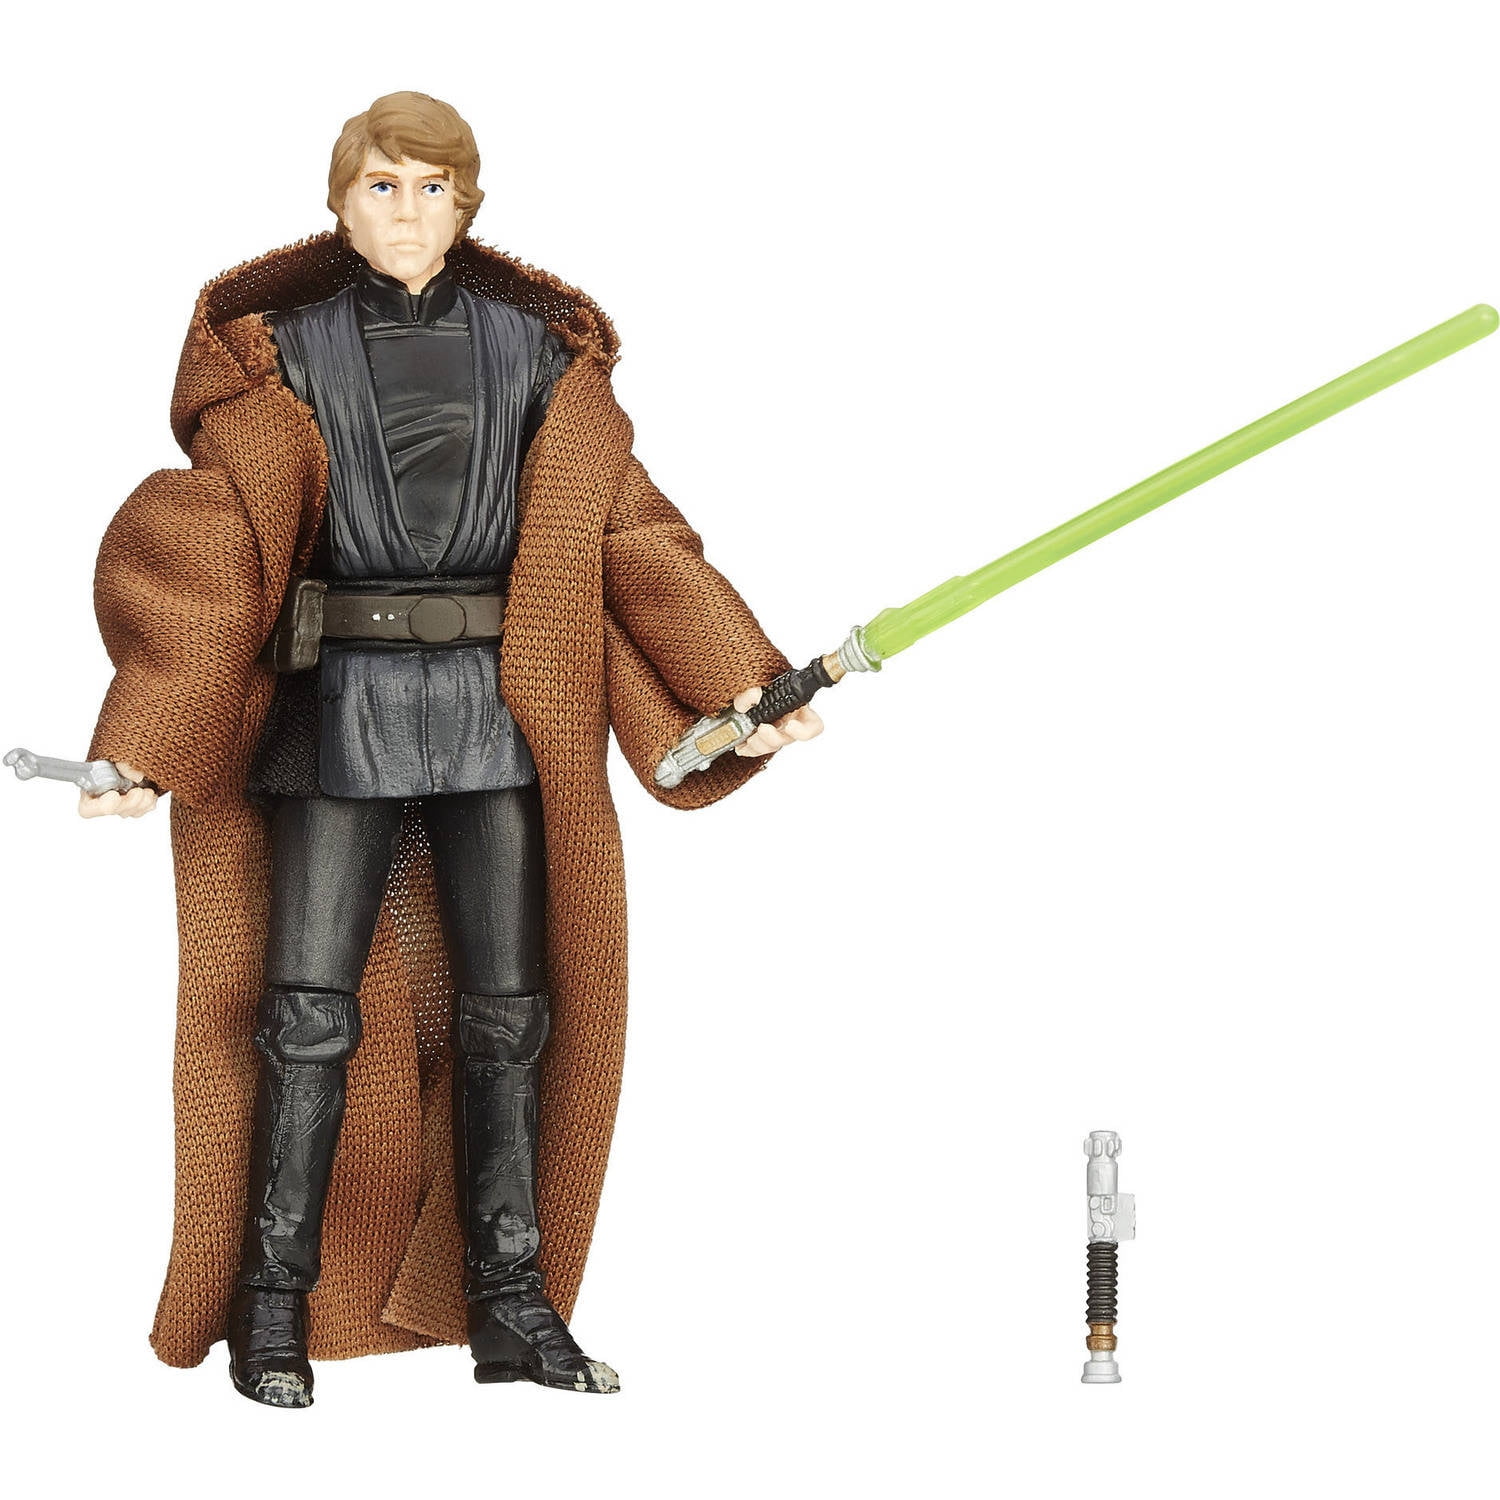 Hasbro Star Wars The Black Series 2015 Luke Skywalker 5" Action Figure 1025t for sale online 